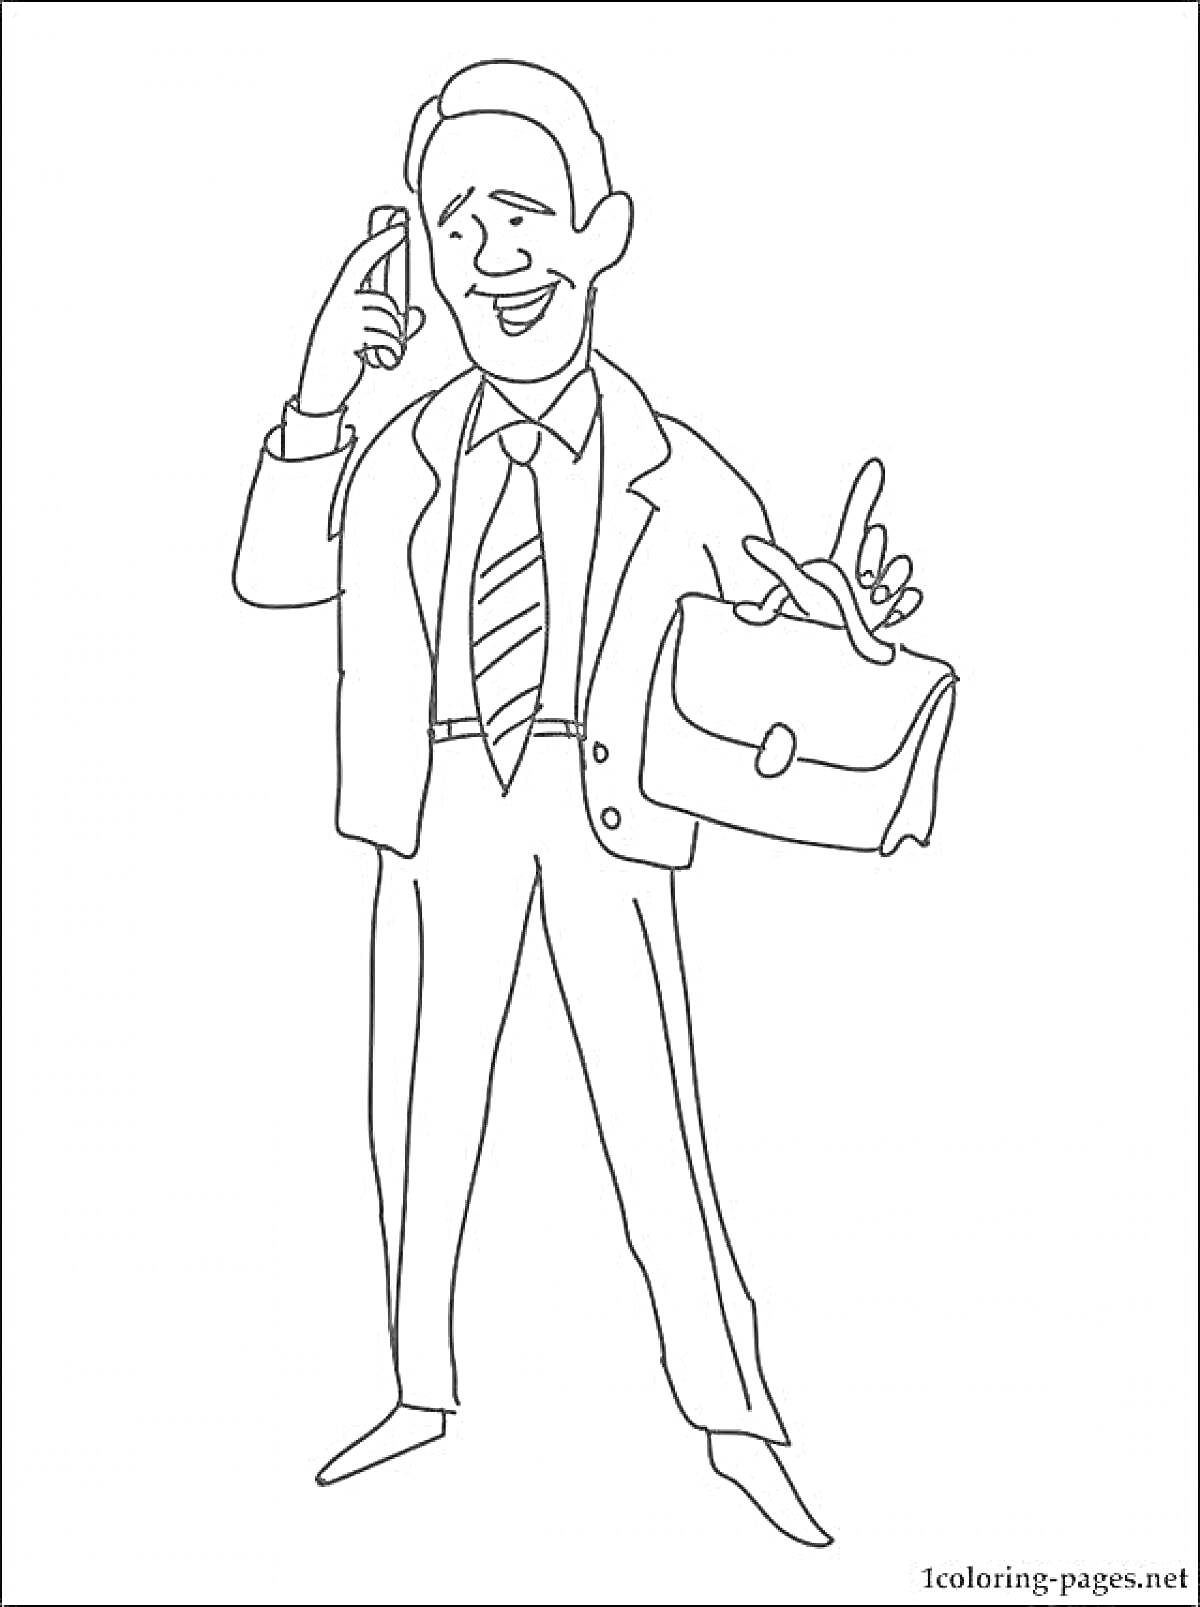 Раскраска Мужчина в костюме с портфелем и телефоном